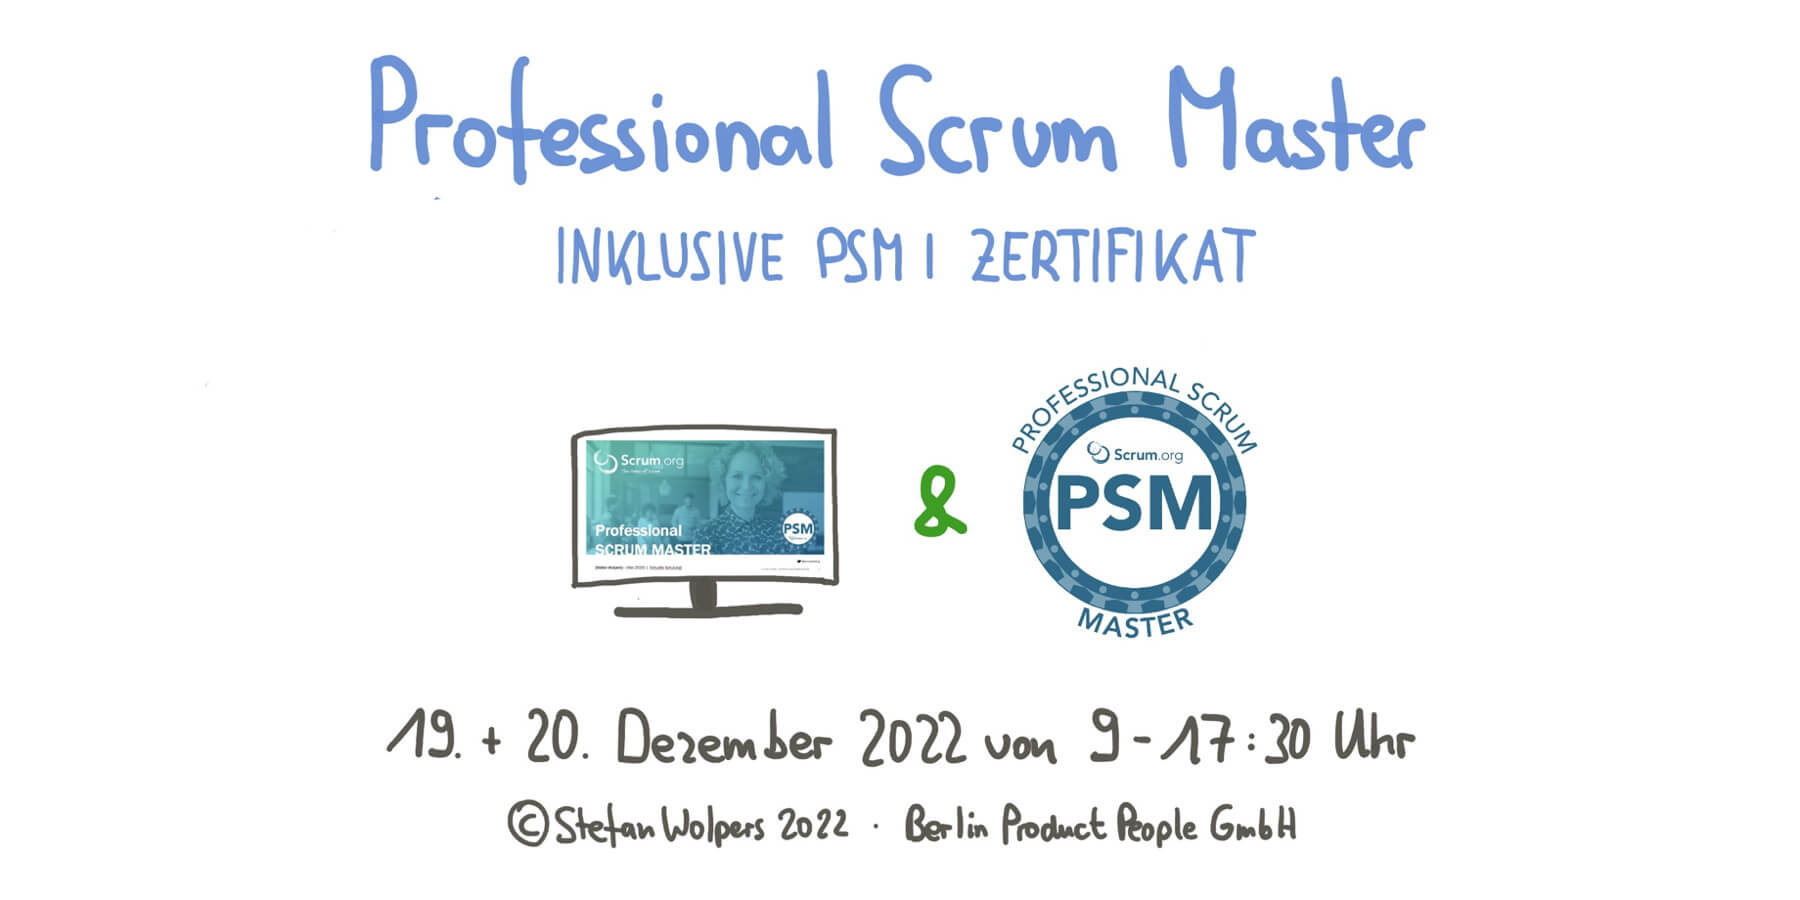 Professional Scrum Master Online Training PSM I Zertifikat Dezember 2022 — Berlin Product People GmbH — BER-88